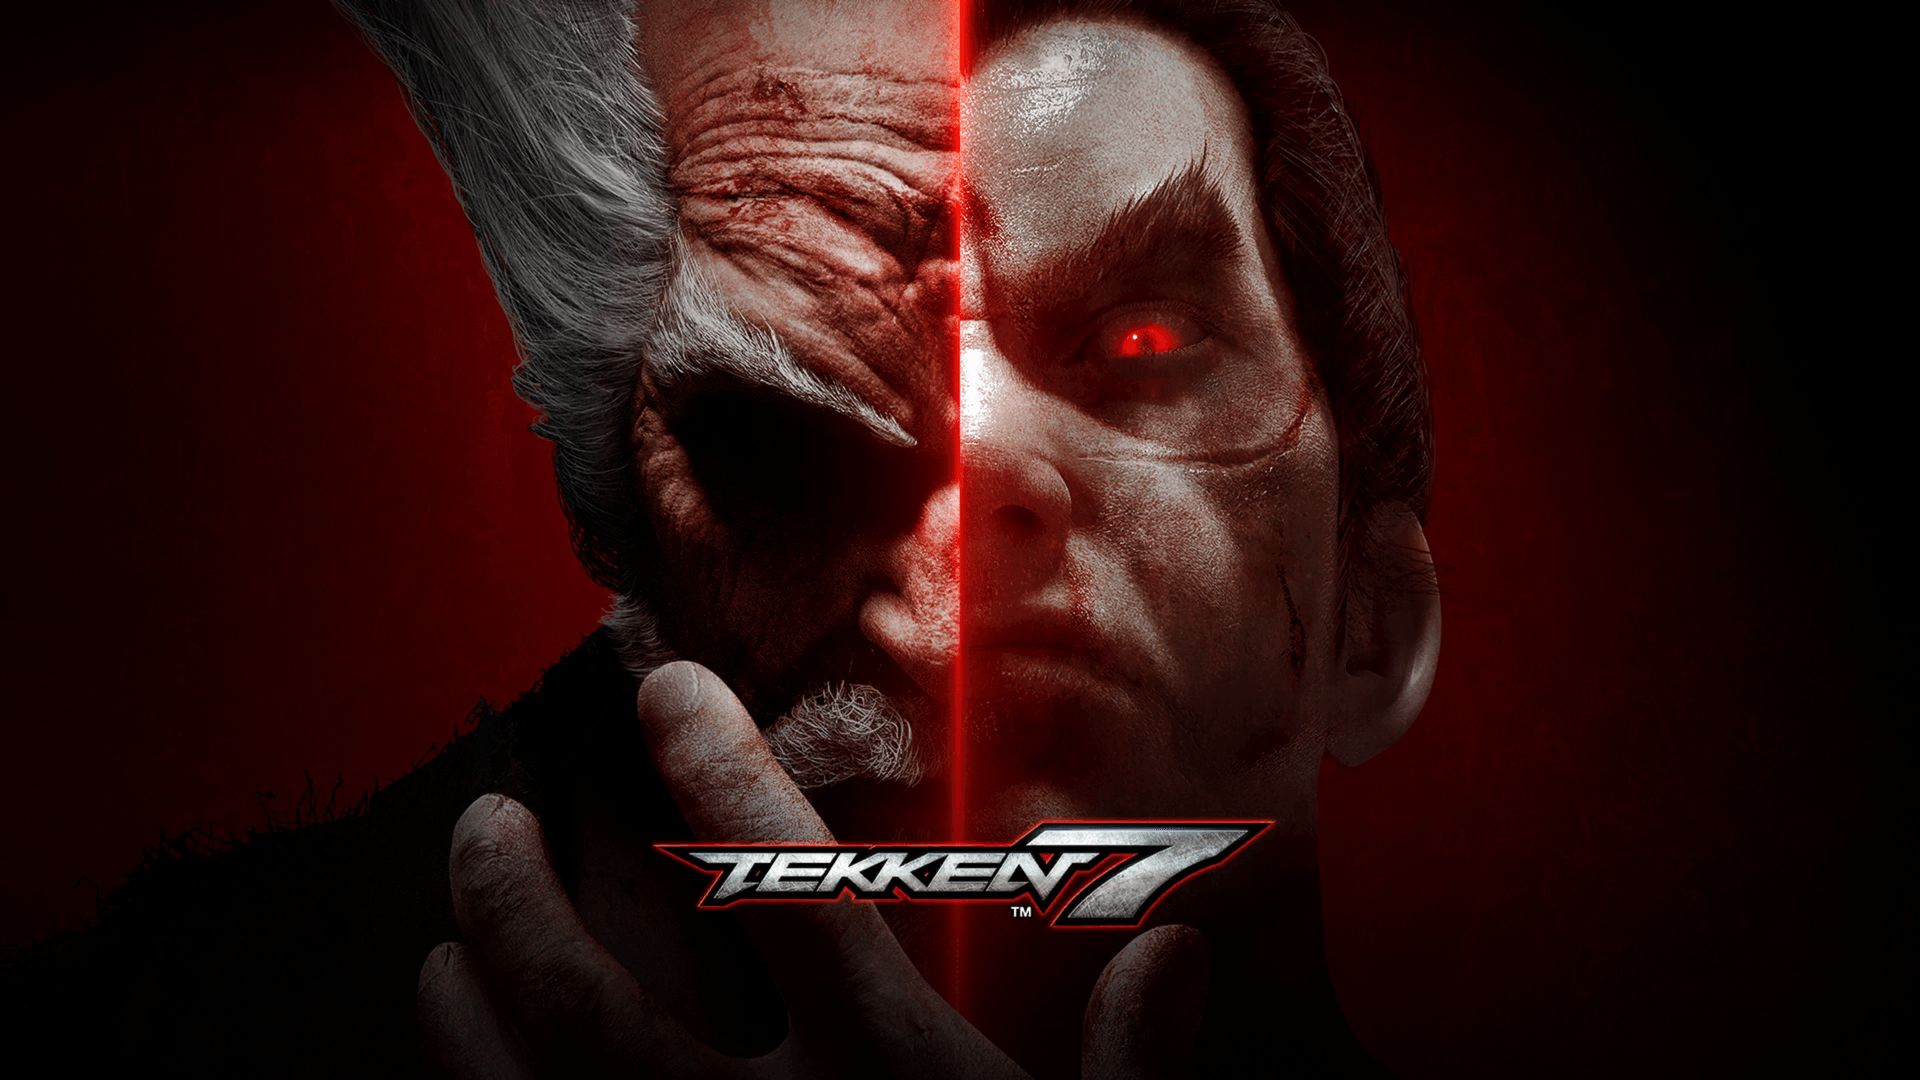 Tekken 7 prodan u 9 milijuna primjeraka